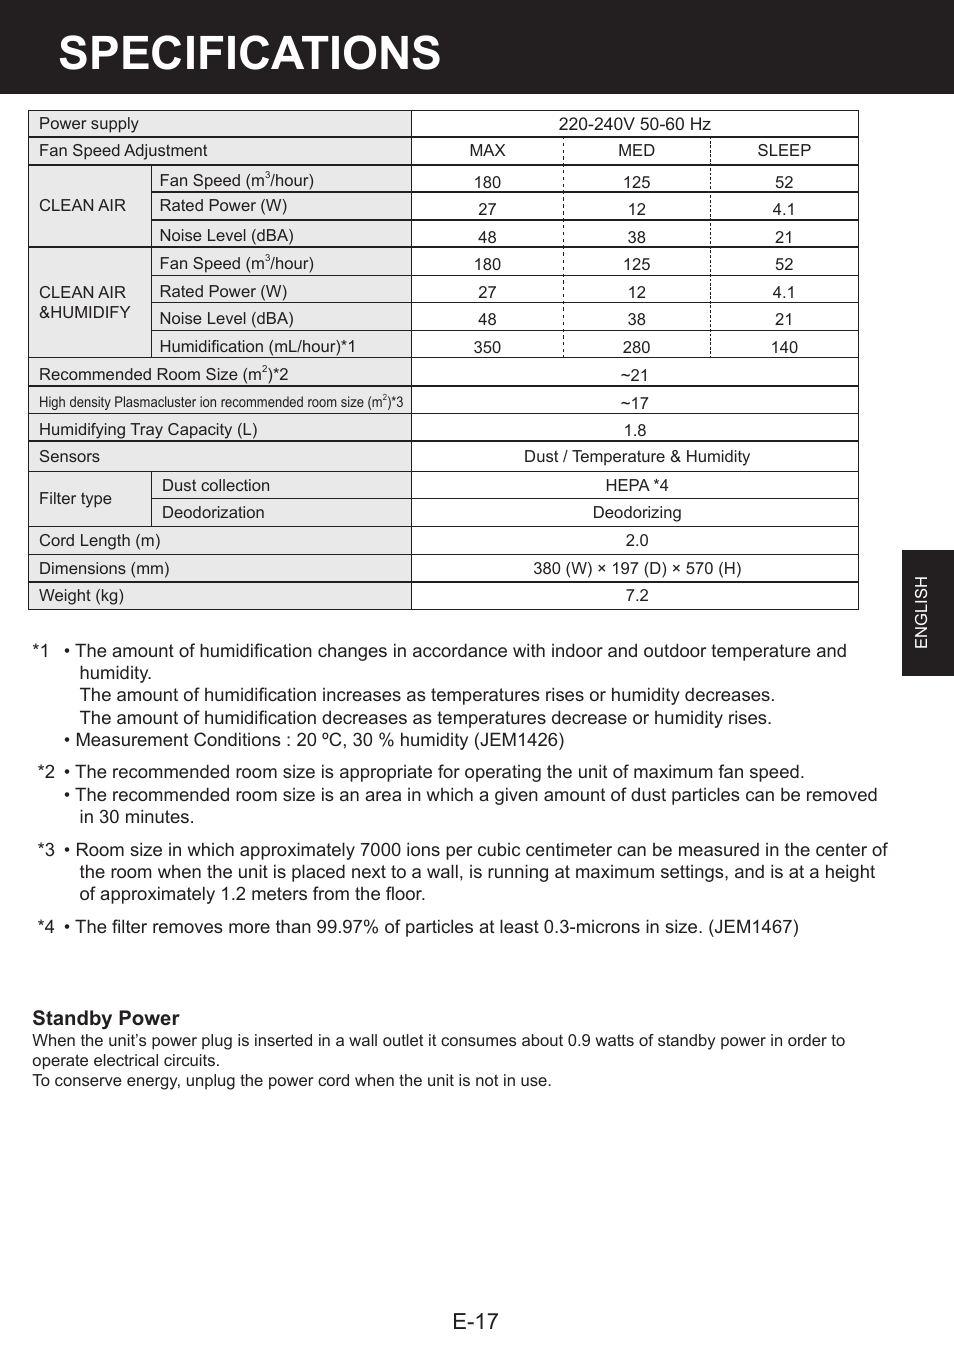 Specifications, E-17, Standby power | Инструкция по эксплуатации Sharp KCF31RW | Страница 39 / 40